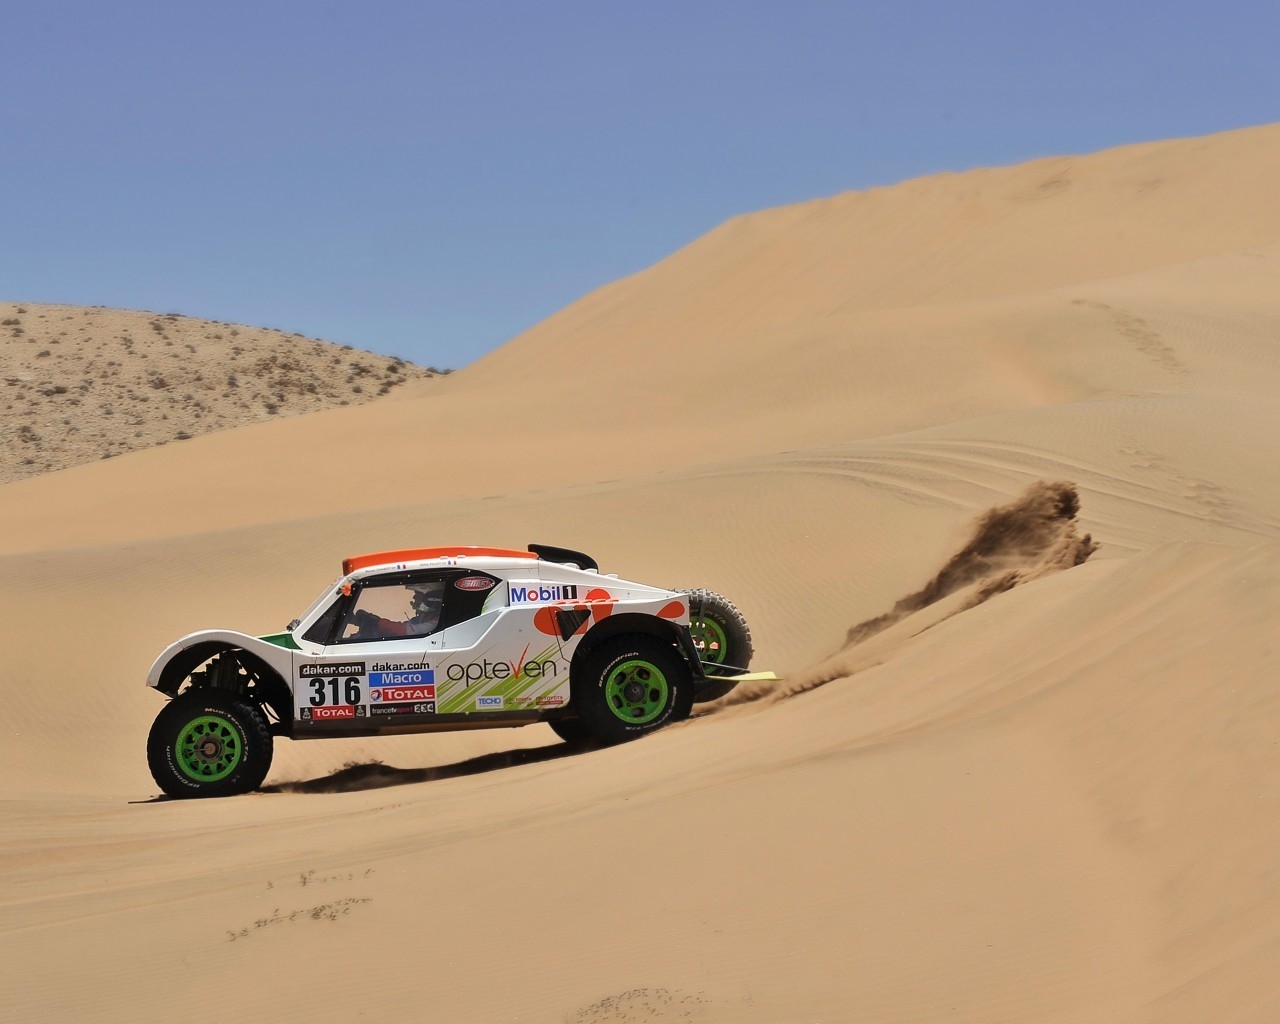 Rally Desert Race for 1280 x 1024 resolution